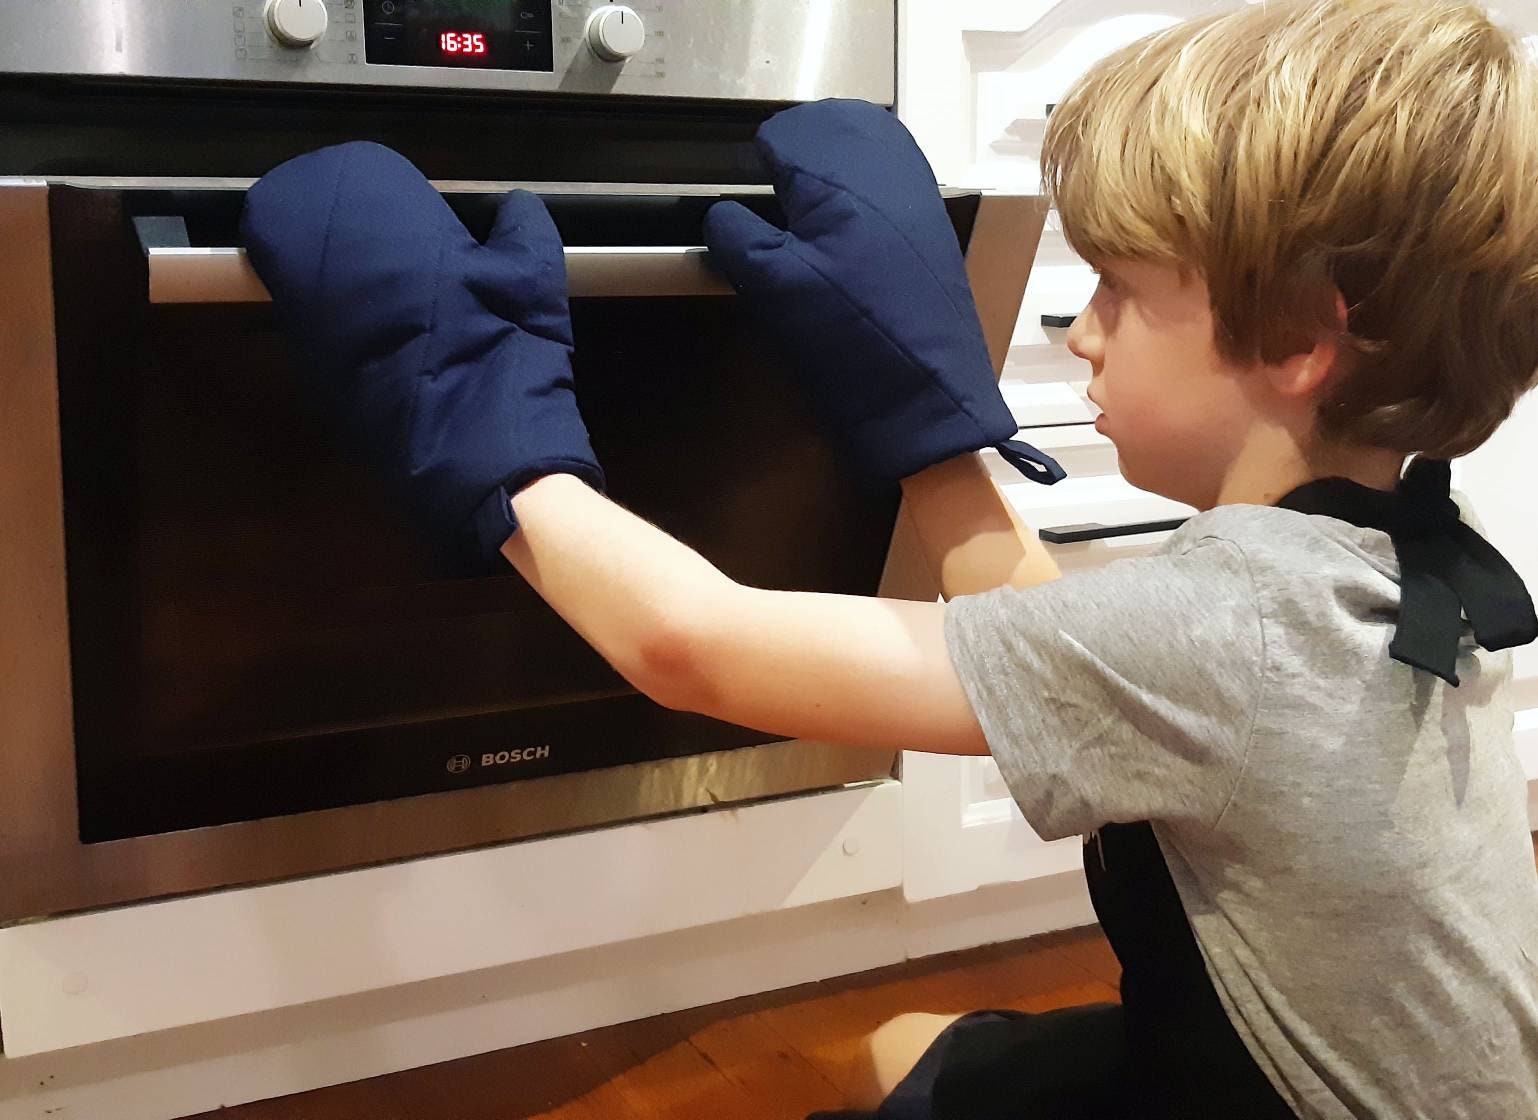 Kids Oven Mittens, Kids Cooking Gloves, Kids Heat Resistant Mitts